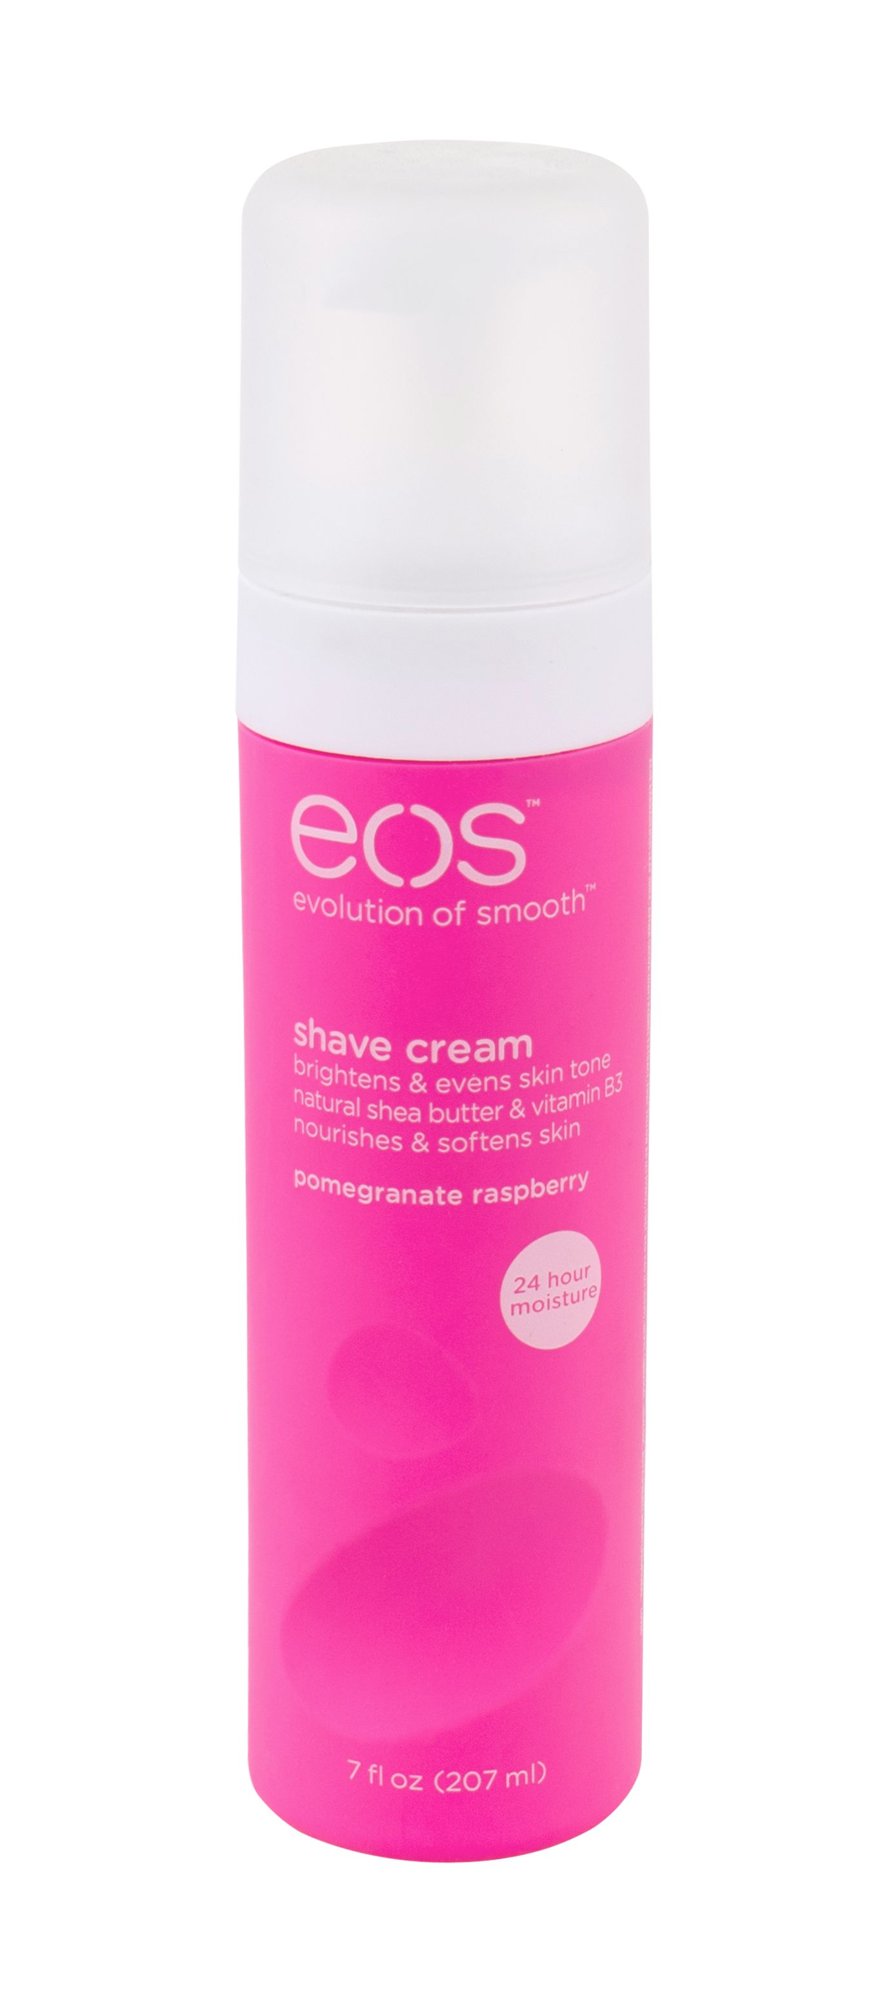 EOS Shave Cream Pomegranate Raspberry skutimosi kremas